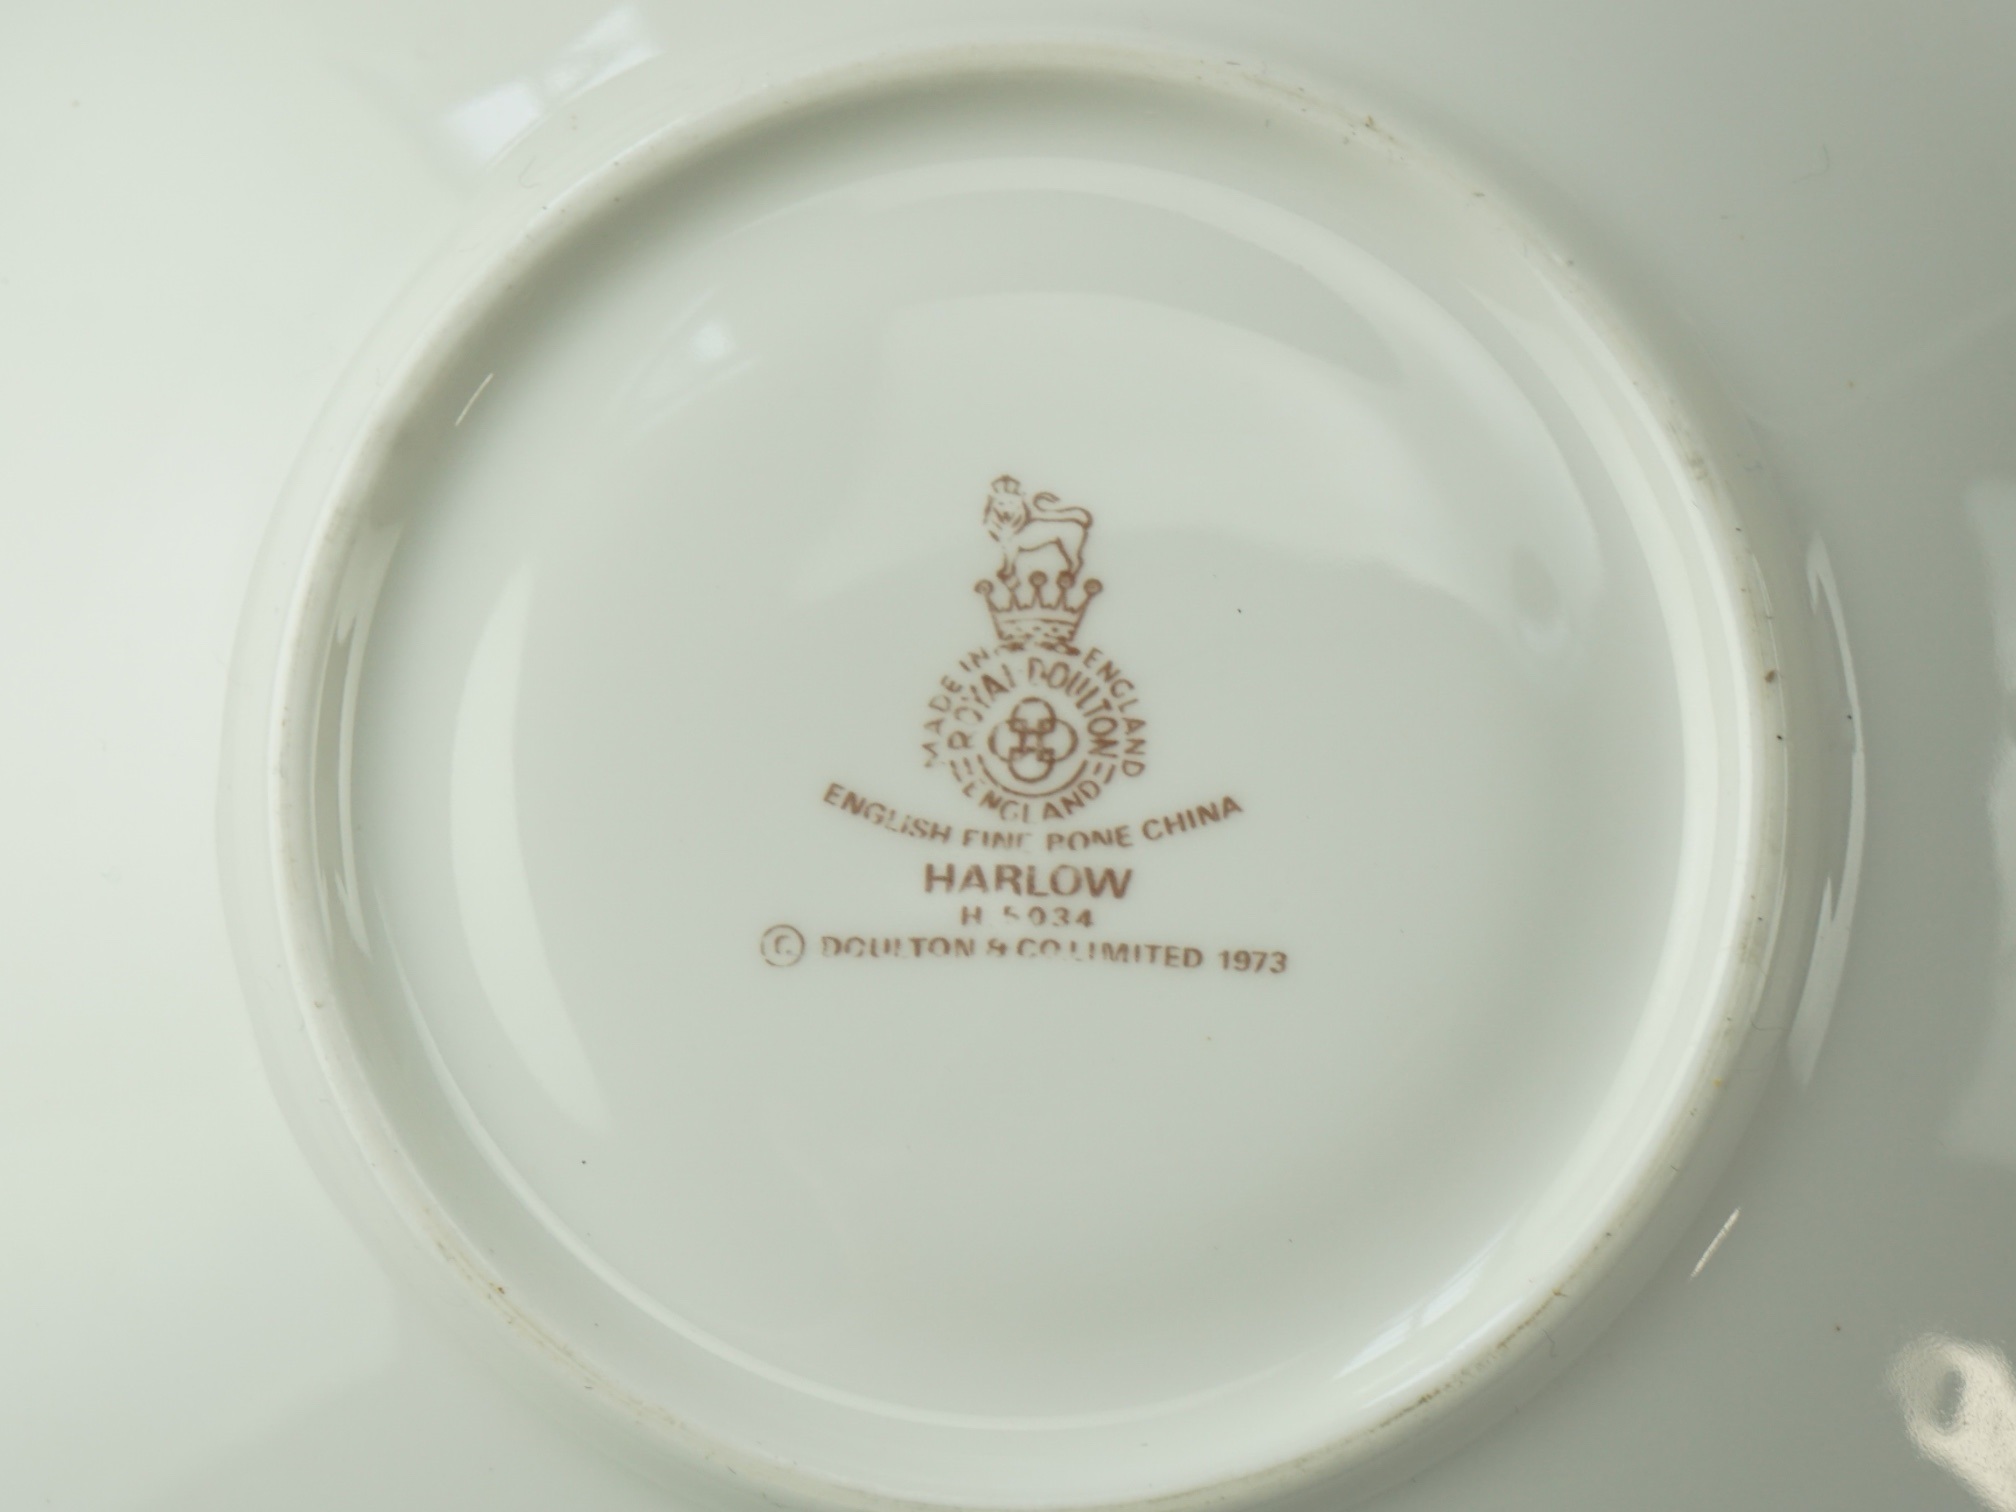 Royal Doulton "Harlow" tea and dinnerware - Image 2 of 2